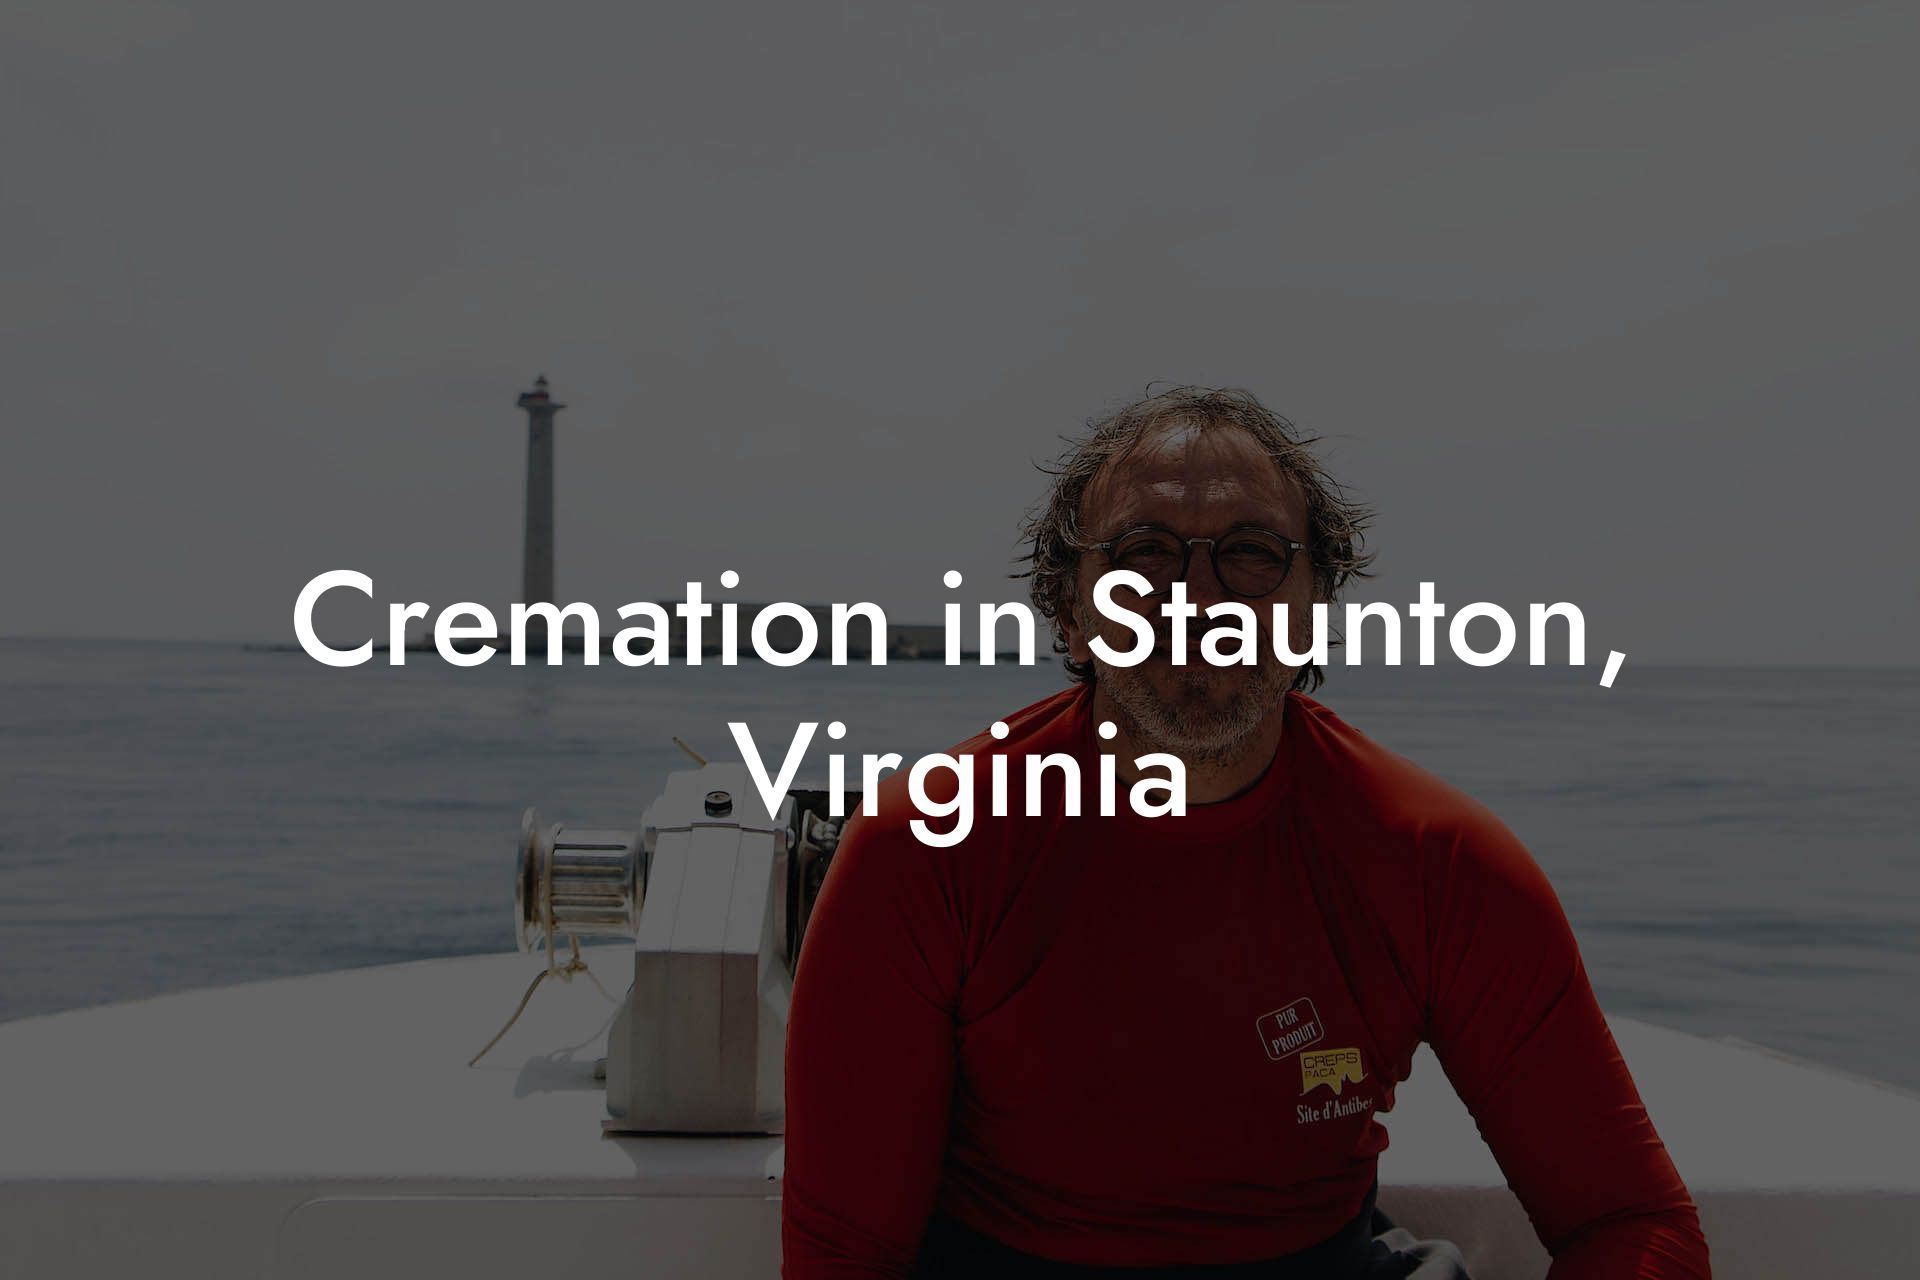 Cremation in Staunton, Virginia